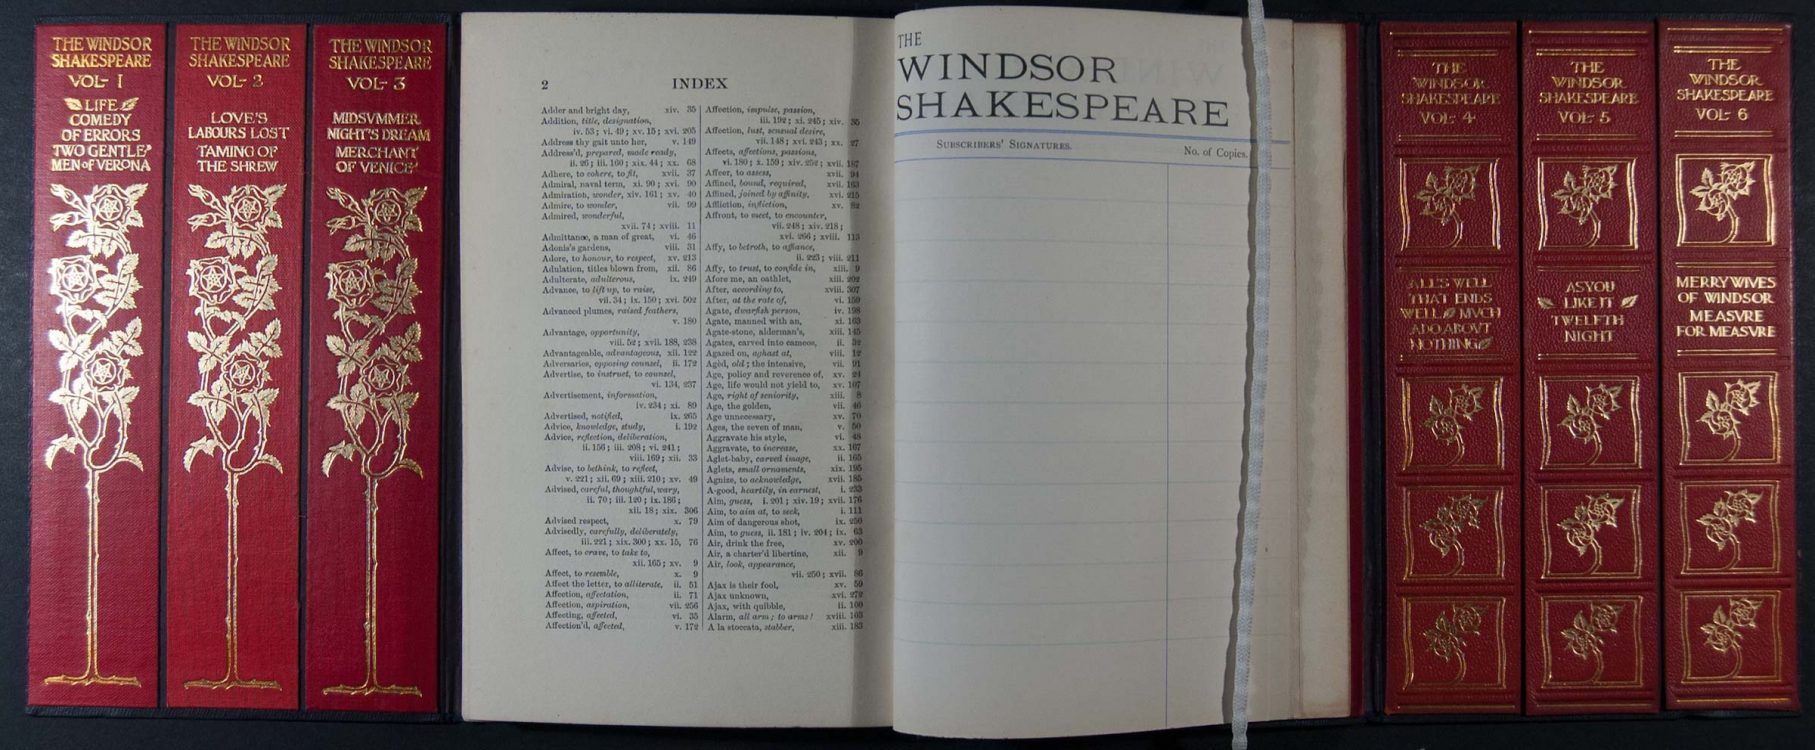 The Windsor Shakespeare